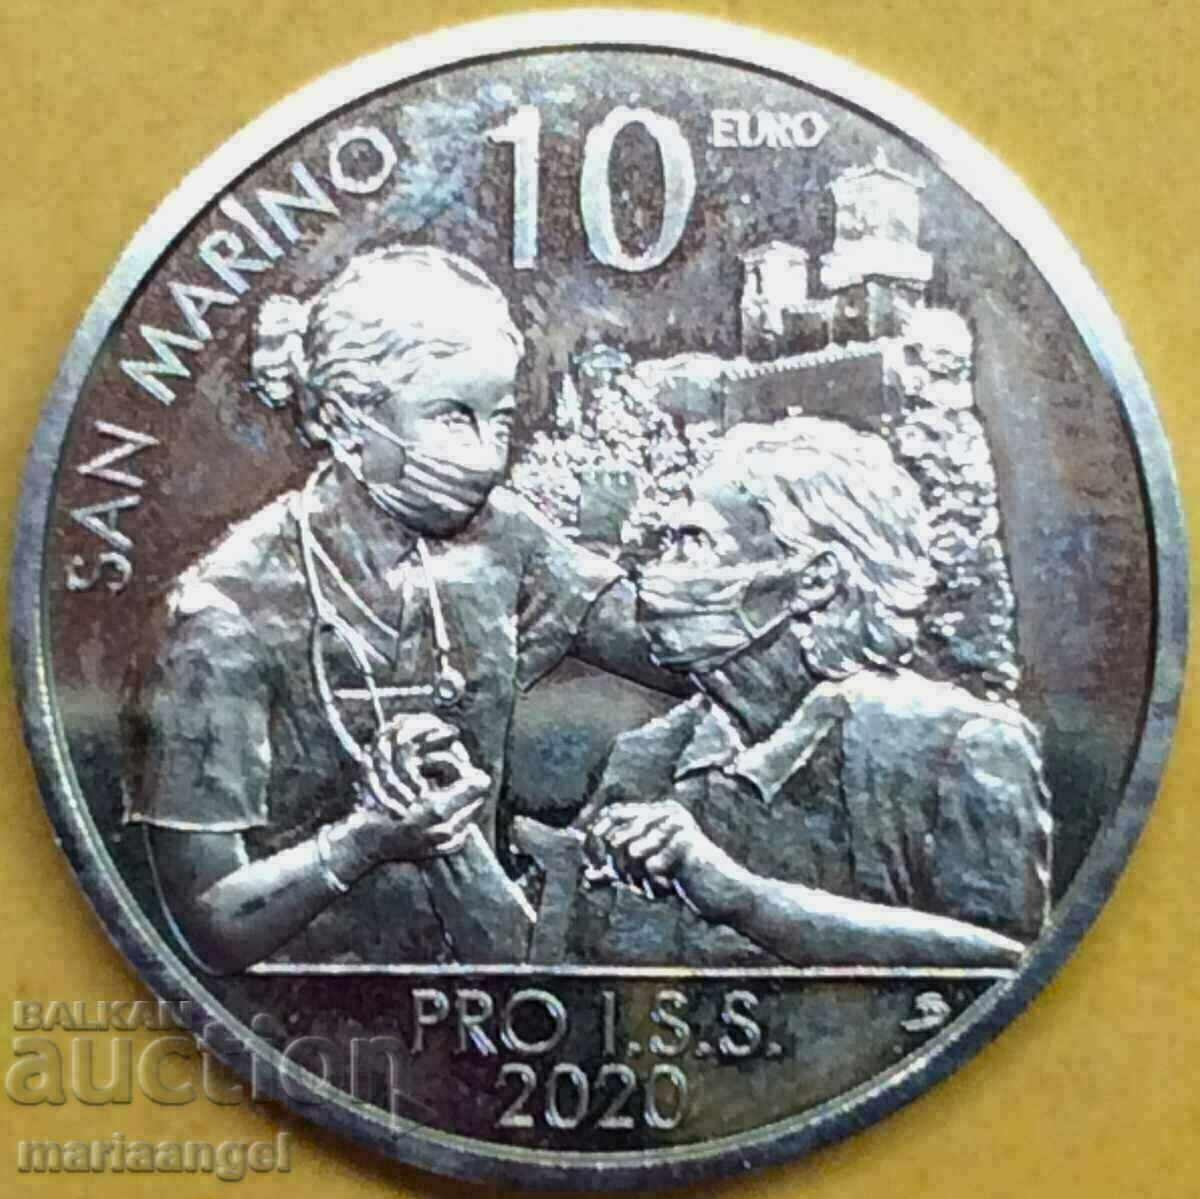 San Marino €10 2020 UNC PROOF